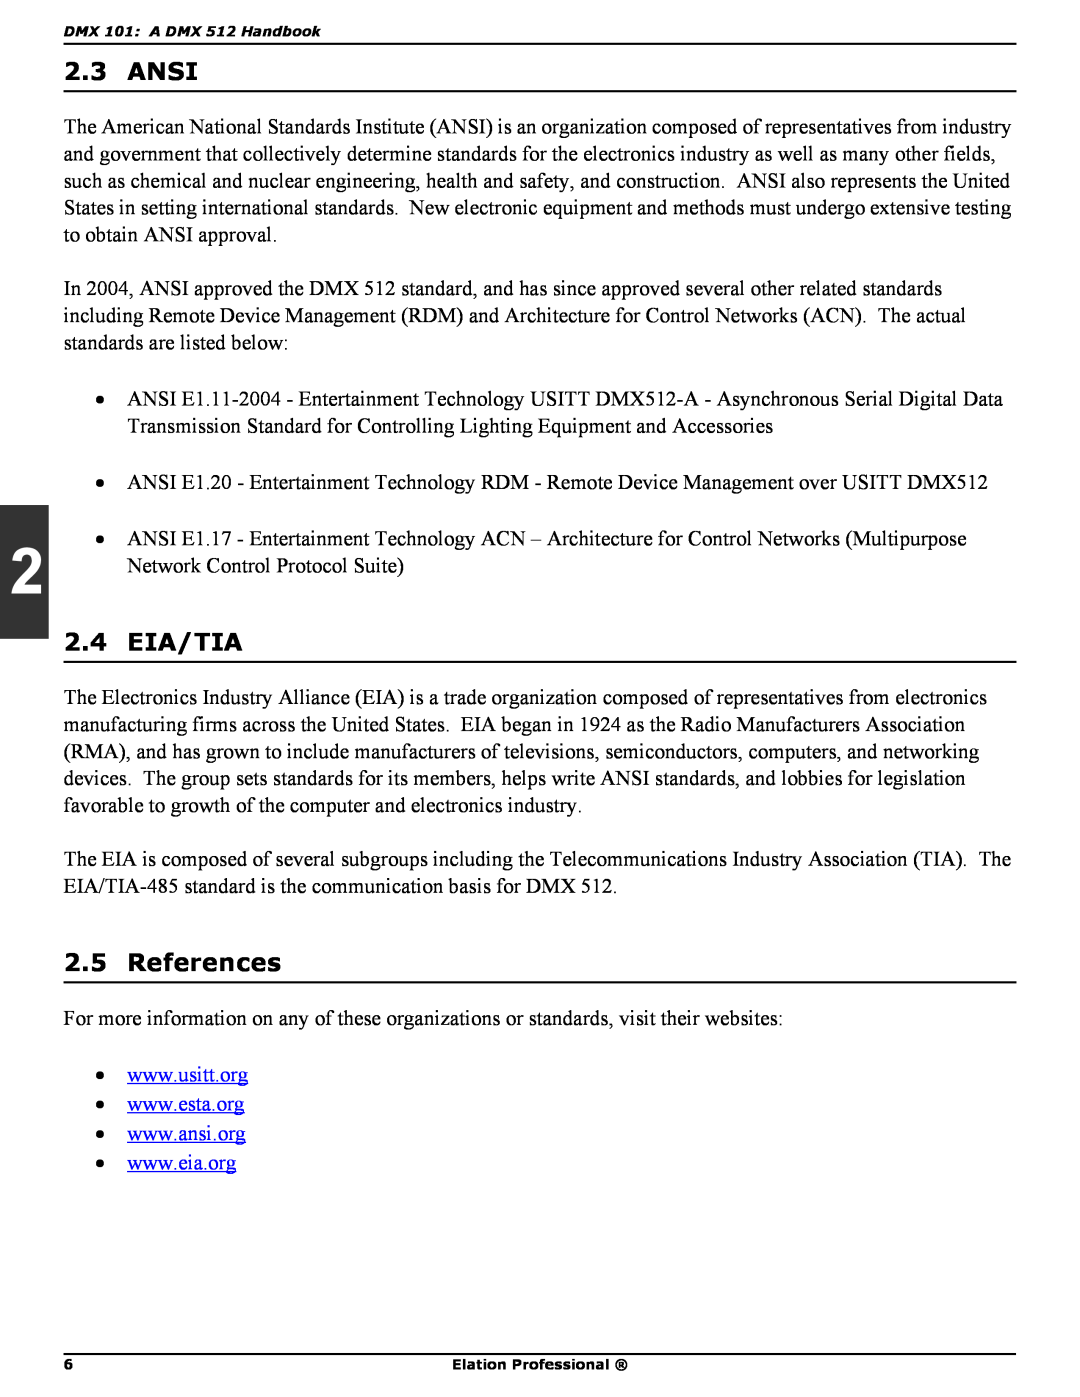 Elation Professional DMX 101 manual Ansi, 2.4 EIA/TIA, References 